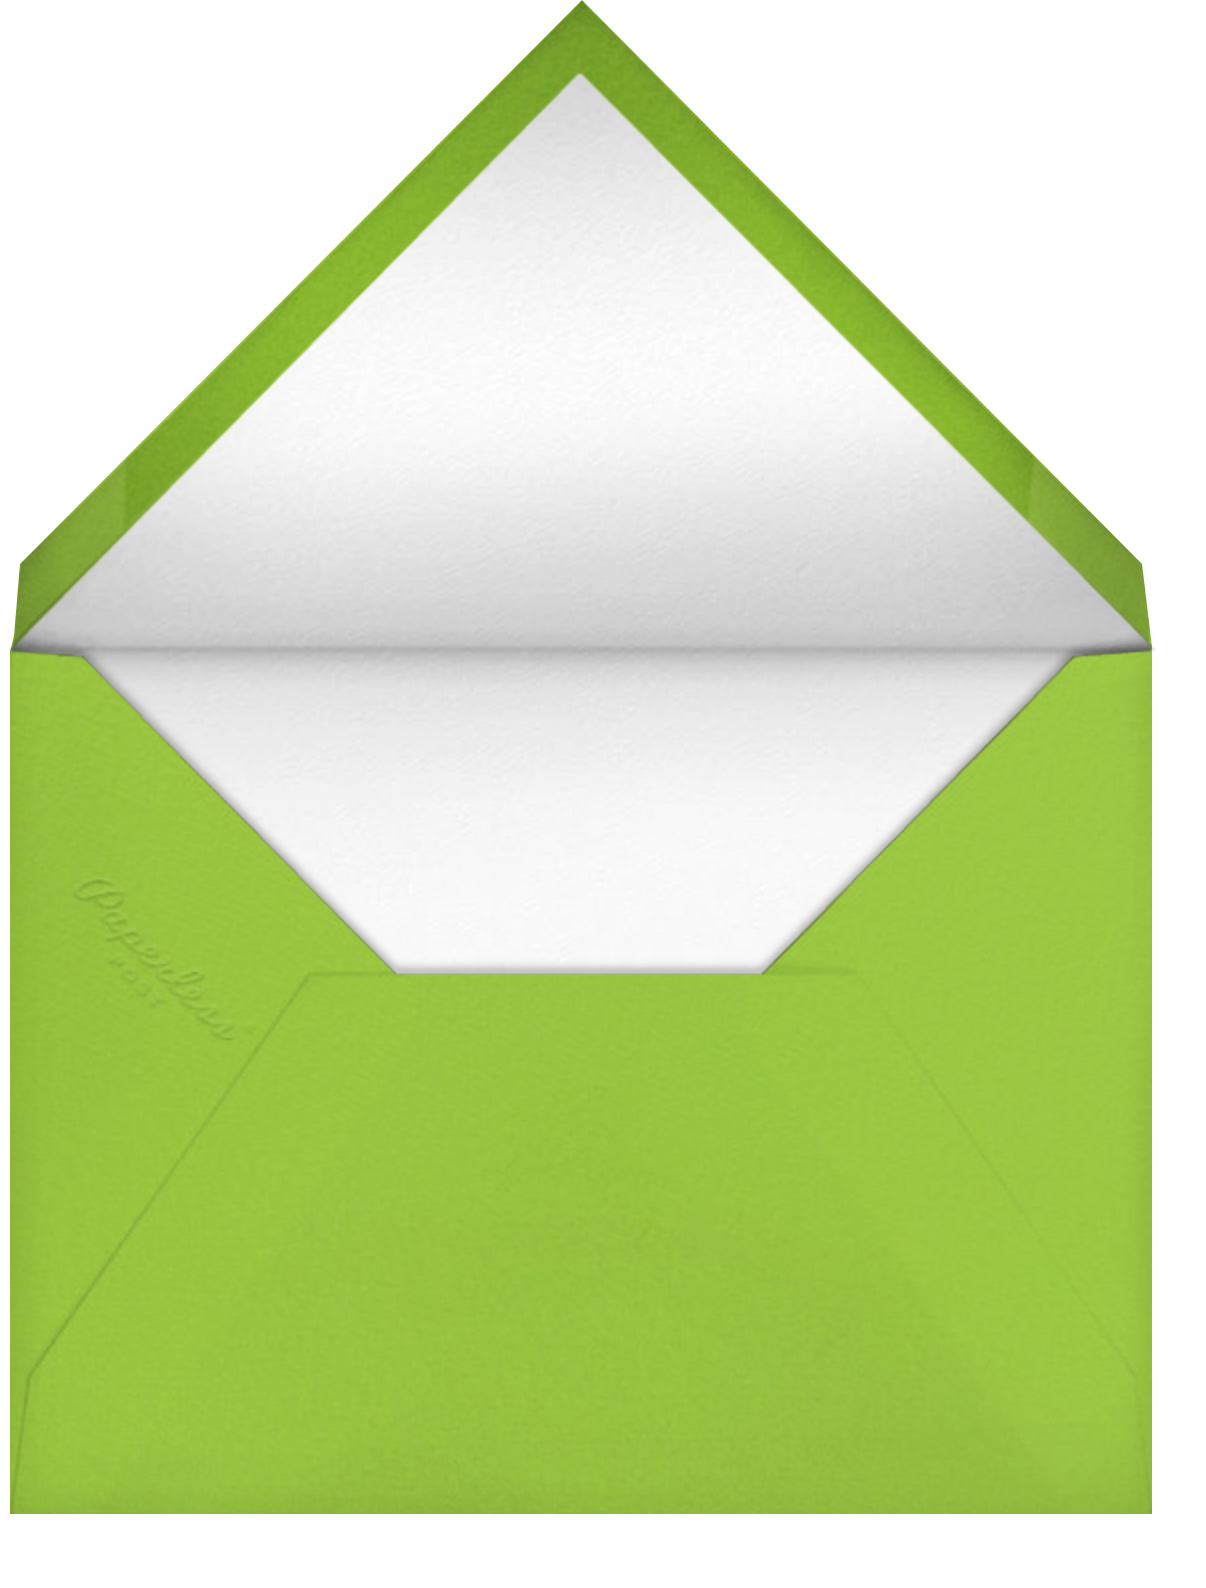 Flint Corn - Paperless Post - Envelope